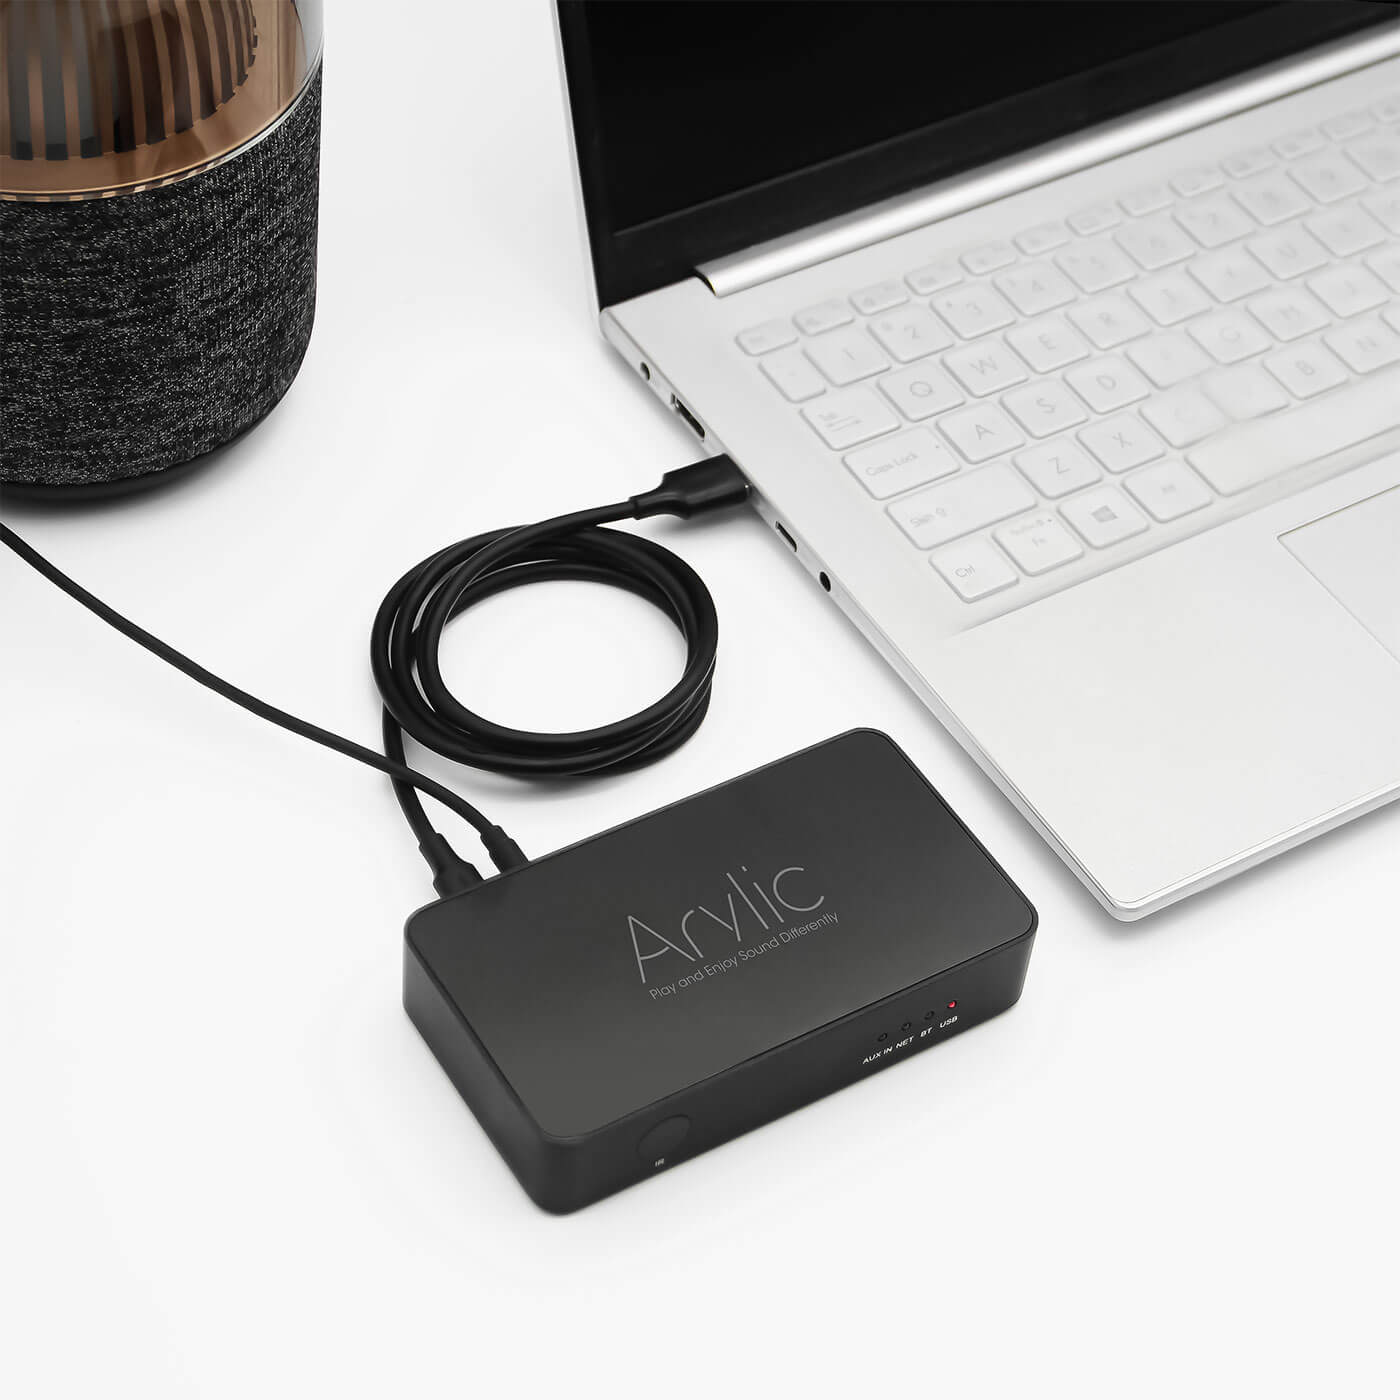 Arylic S10 WiFi & Bluetooth Hi-Fi Audio Streaming Preamplifier